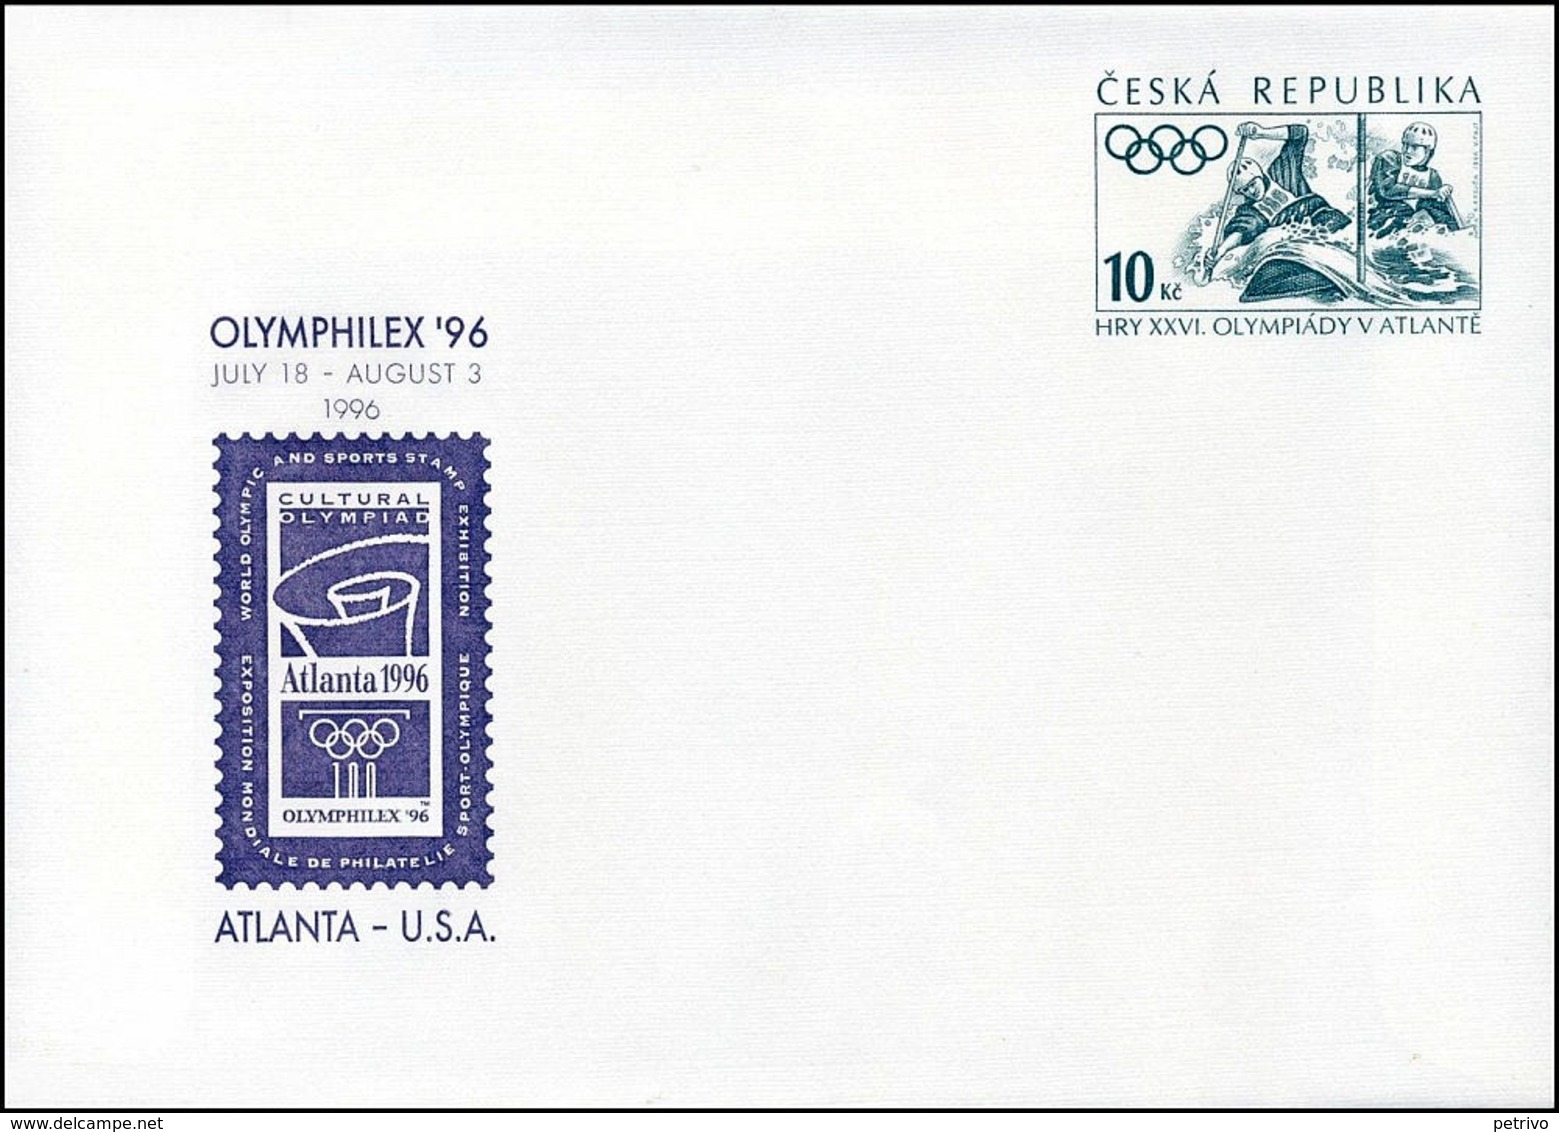 Czech Republic - 1996 C - Olympic Games 1996  - Stationery Cover  (canoe Slalom) - Estate 1996: Atlanta